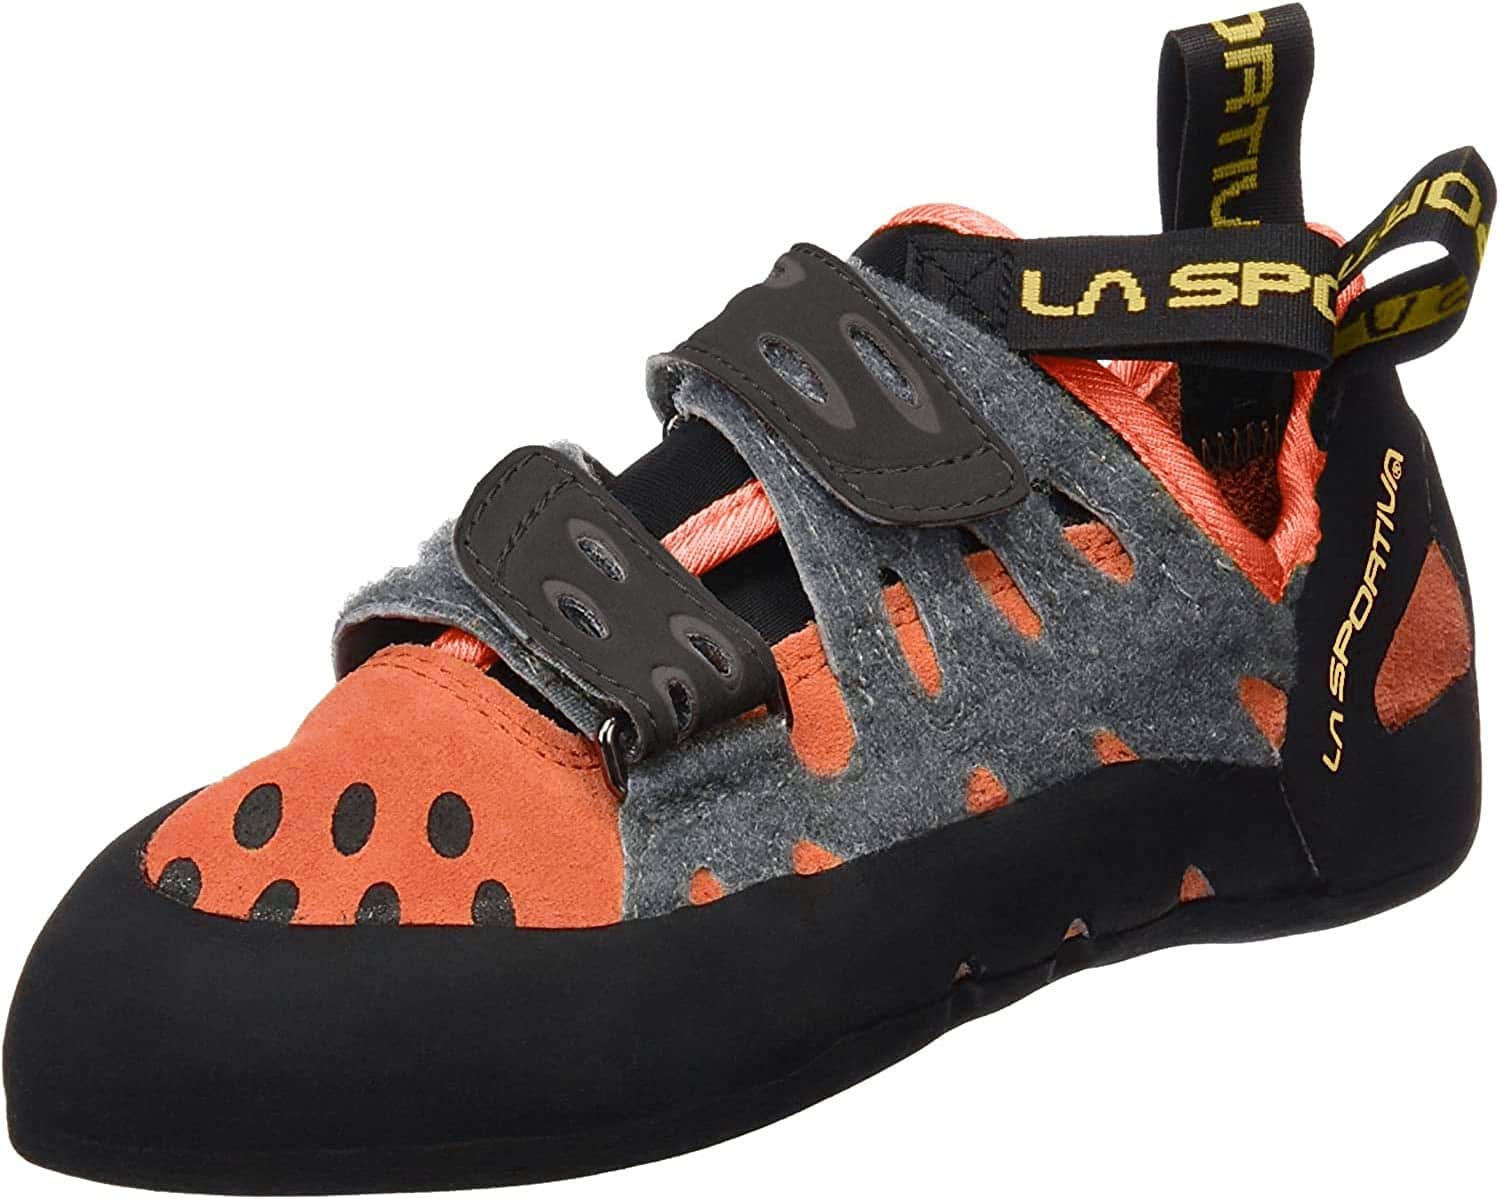 La Sportiva Tarantula shoes